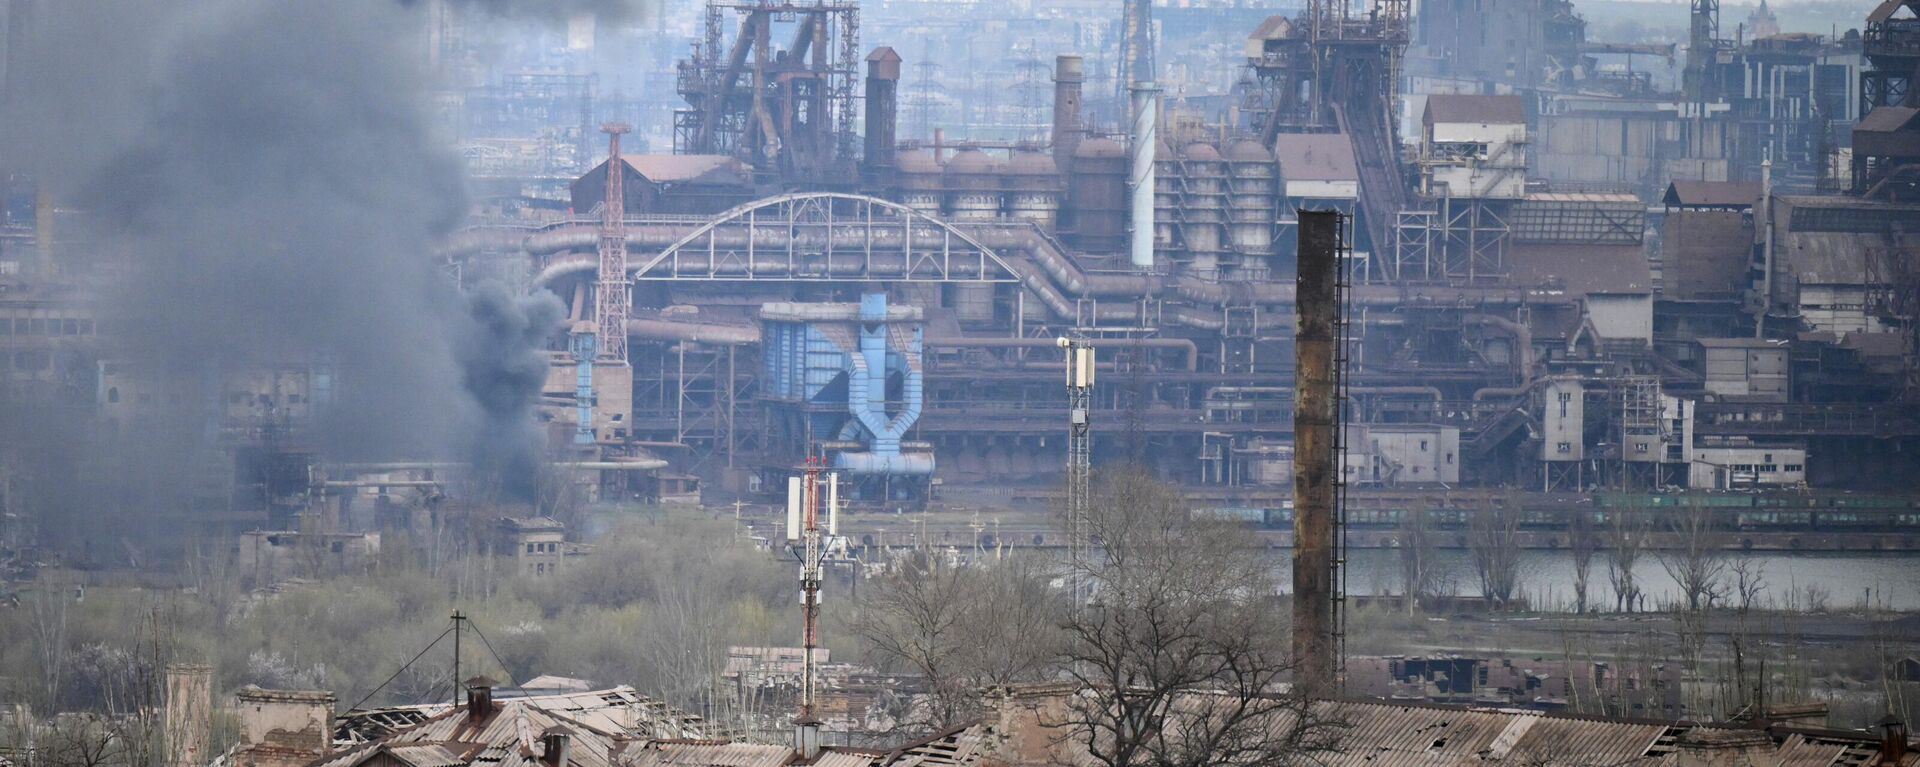 La planta de Azovstal en la ciudad ucraniana de Mariúpol - Sputnik Mundo, 1920, 01.05.2022